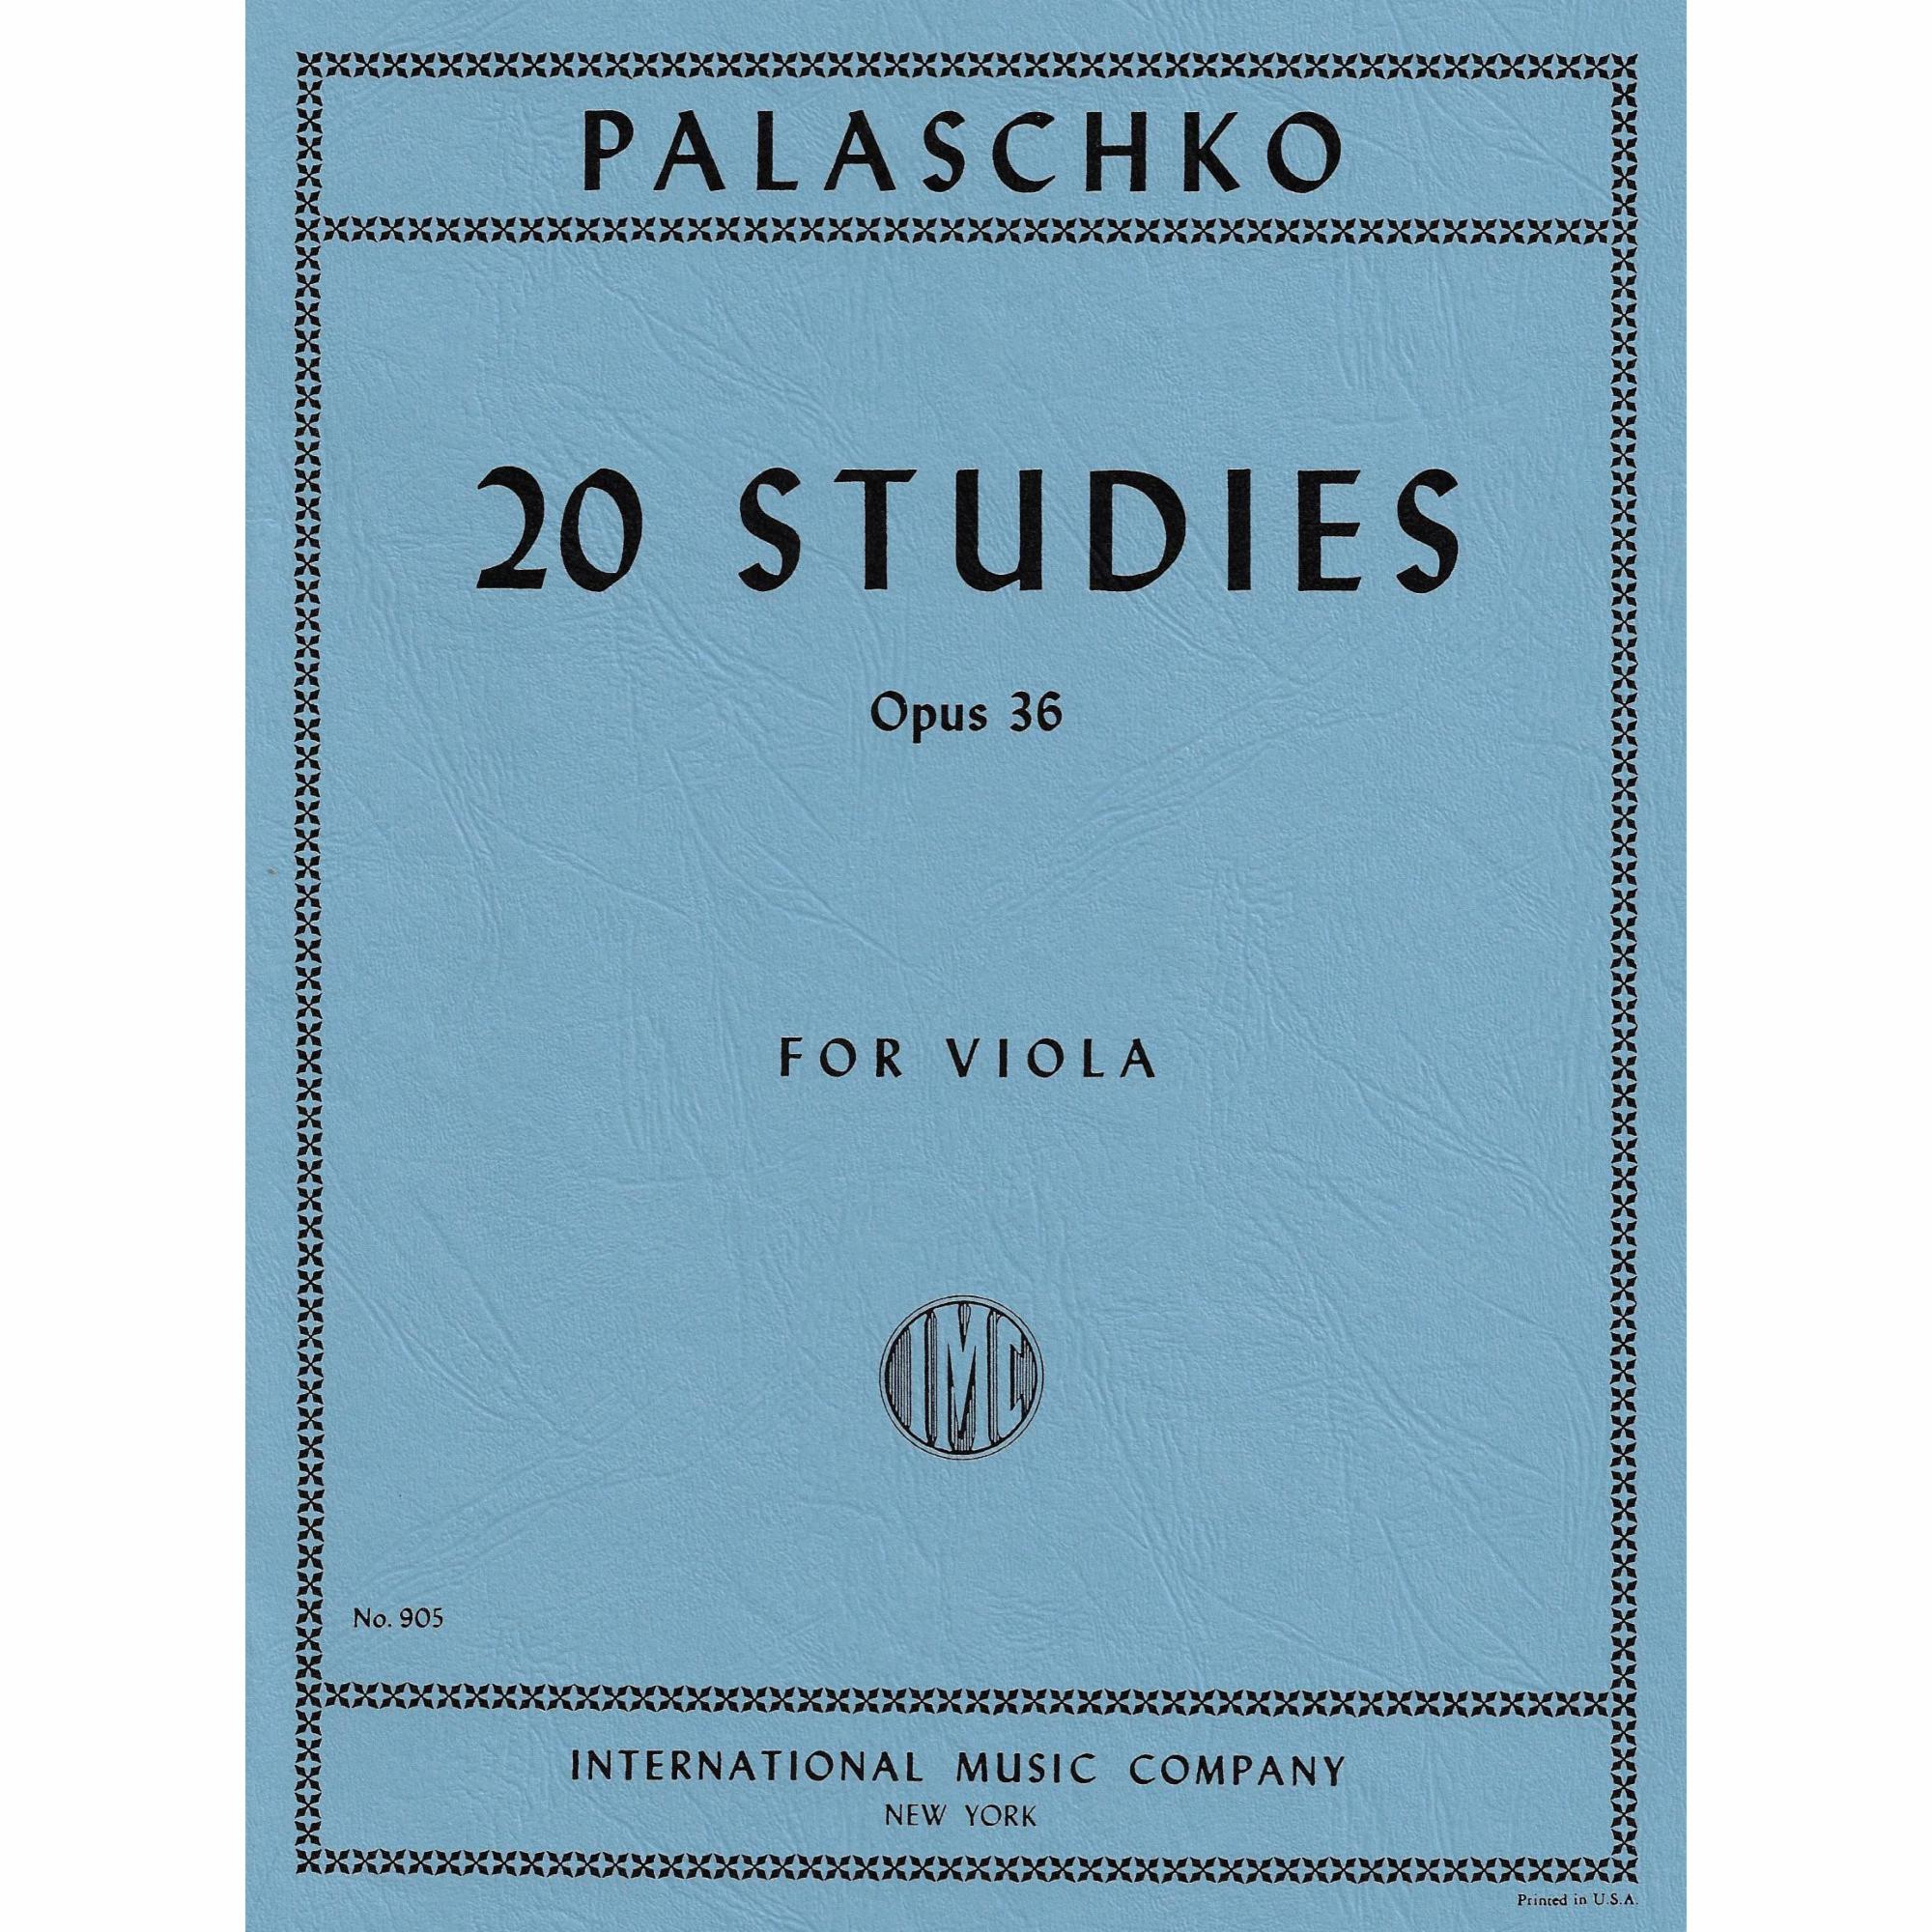 Palaschko -- 20 Studies, Op. 36 for Viola